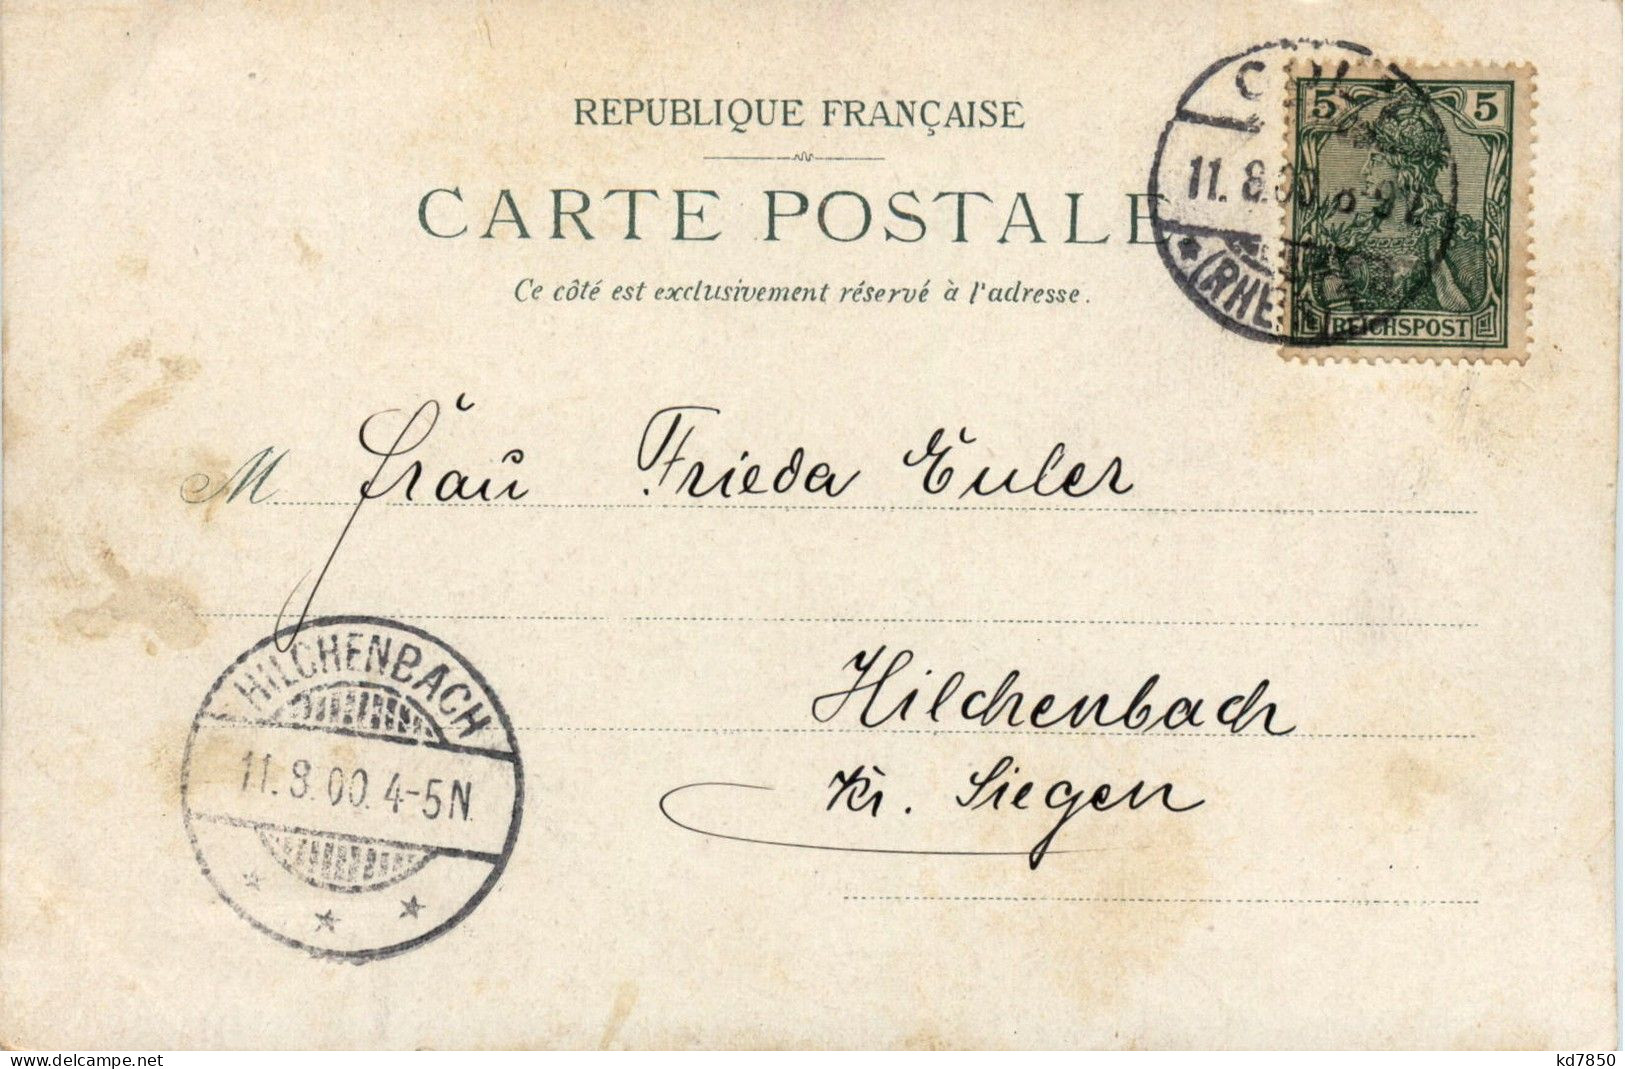 Paris - Exposition 1900 - Expositions